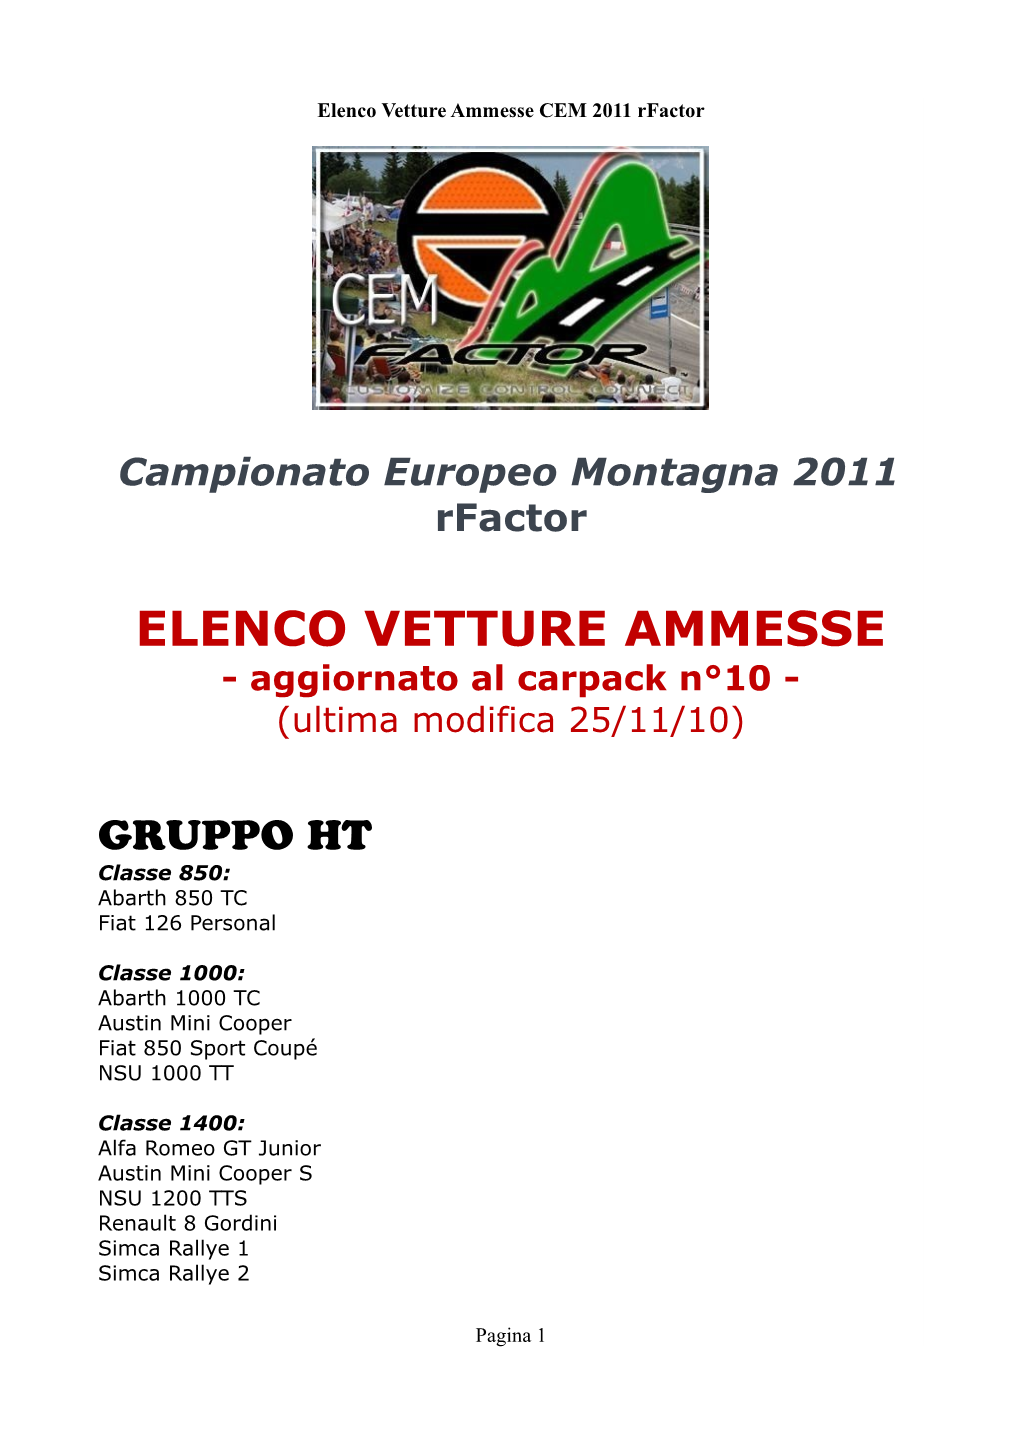 Elenco Vetture Ammesse CEM 2011 Rfactor